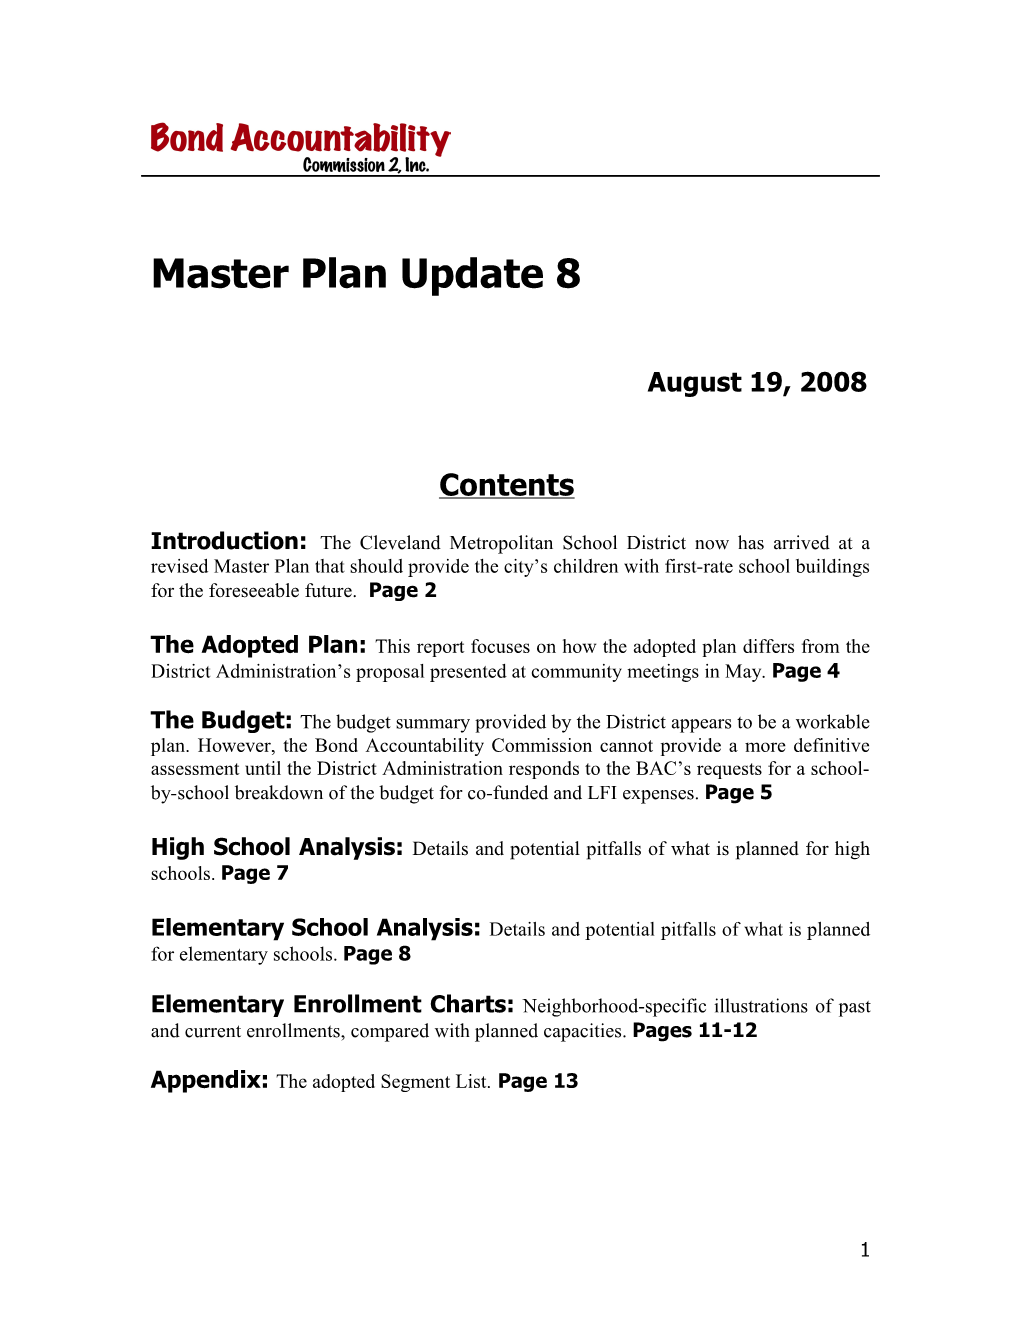 Master Plan Elementary School Enrollment Analysis